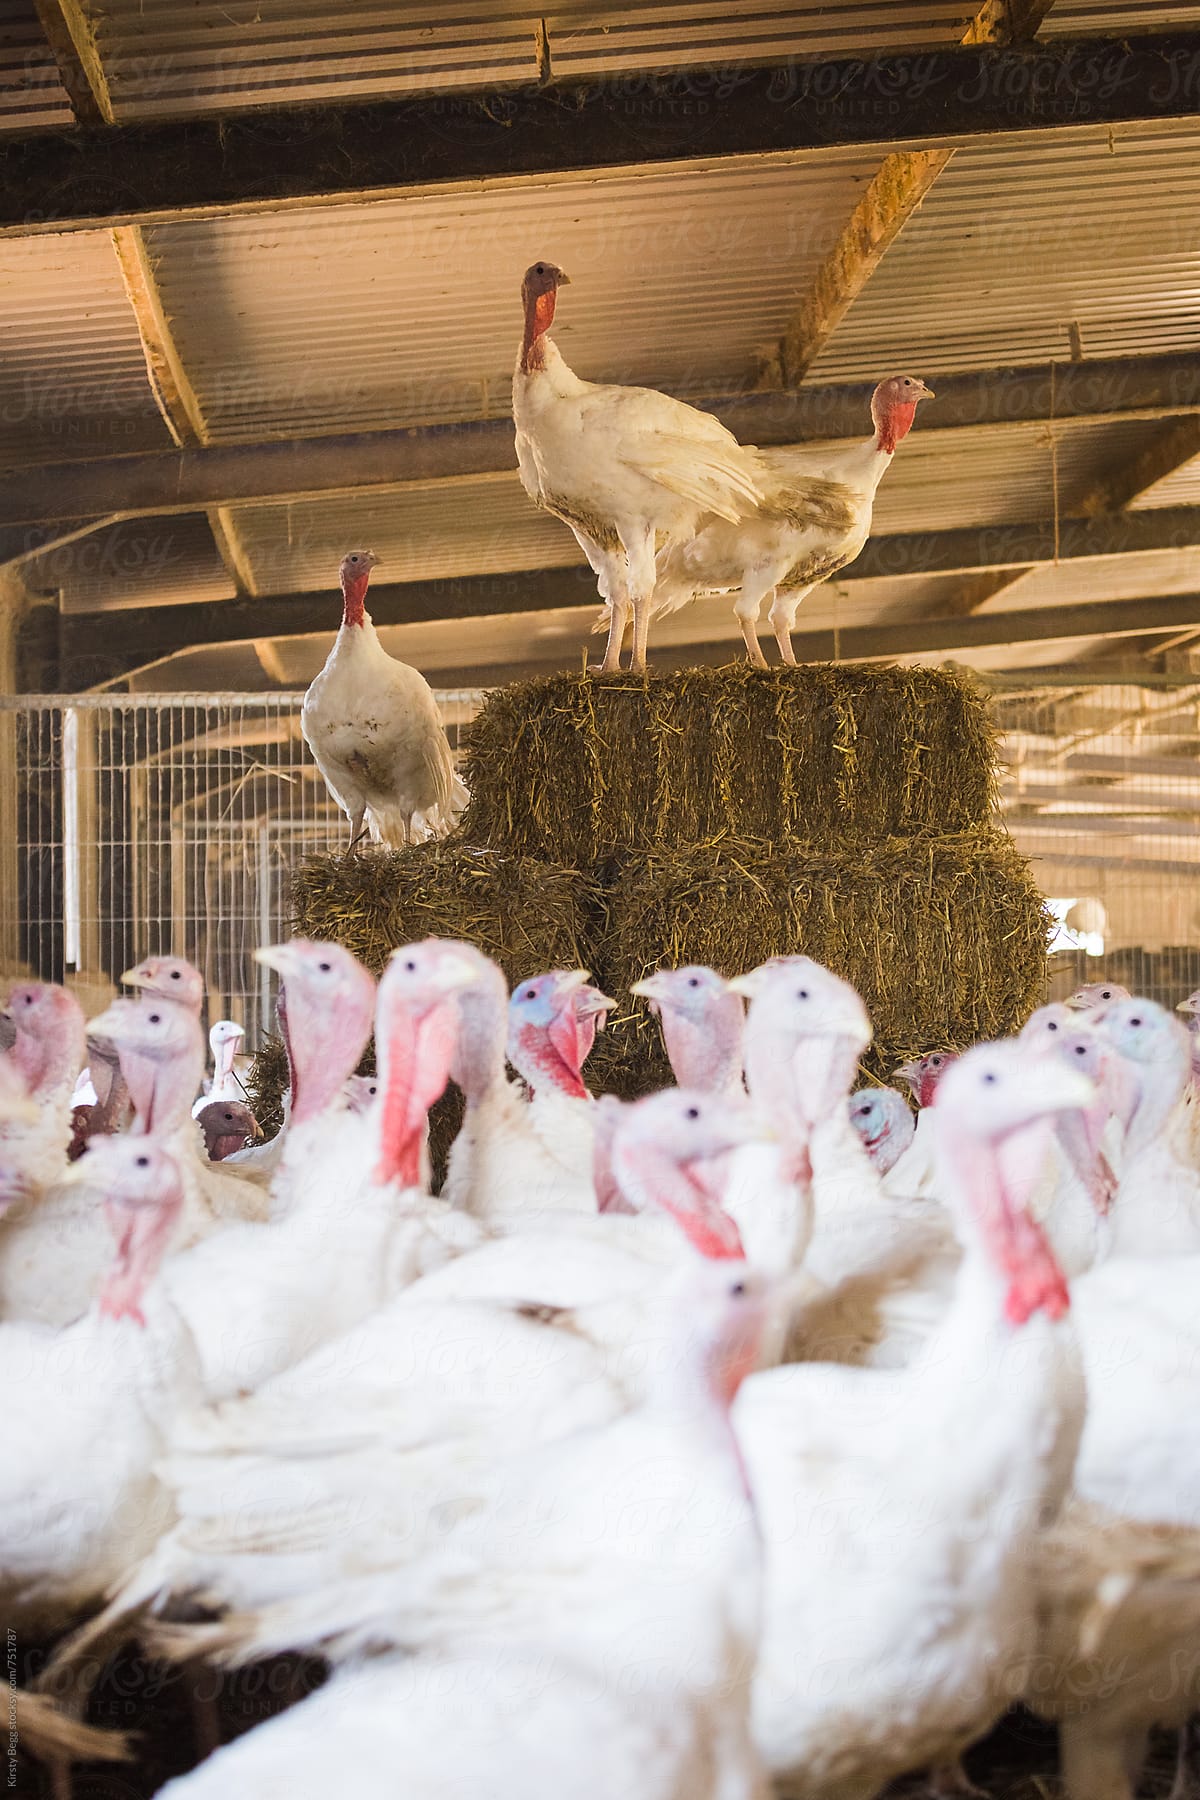 Turkeys on hay bales in barn